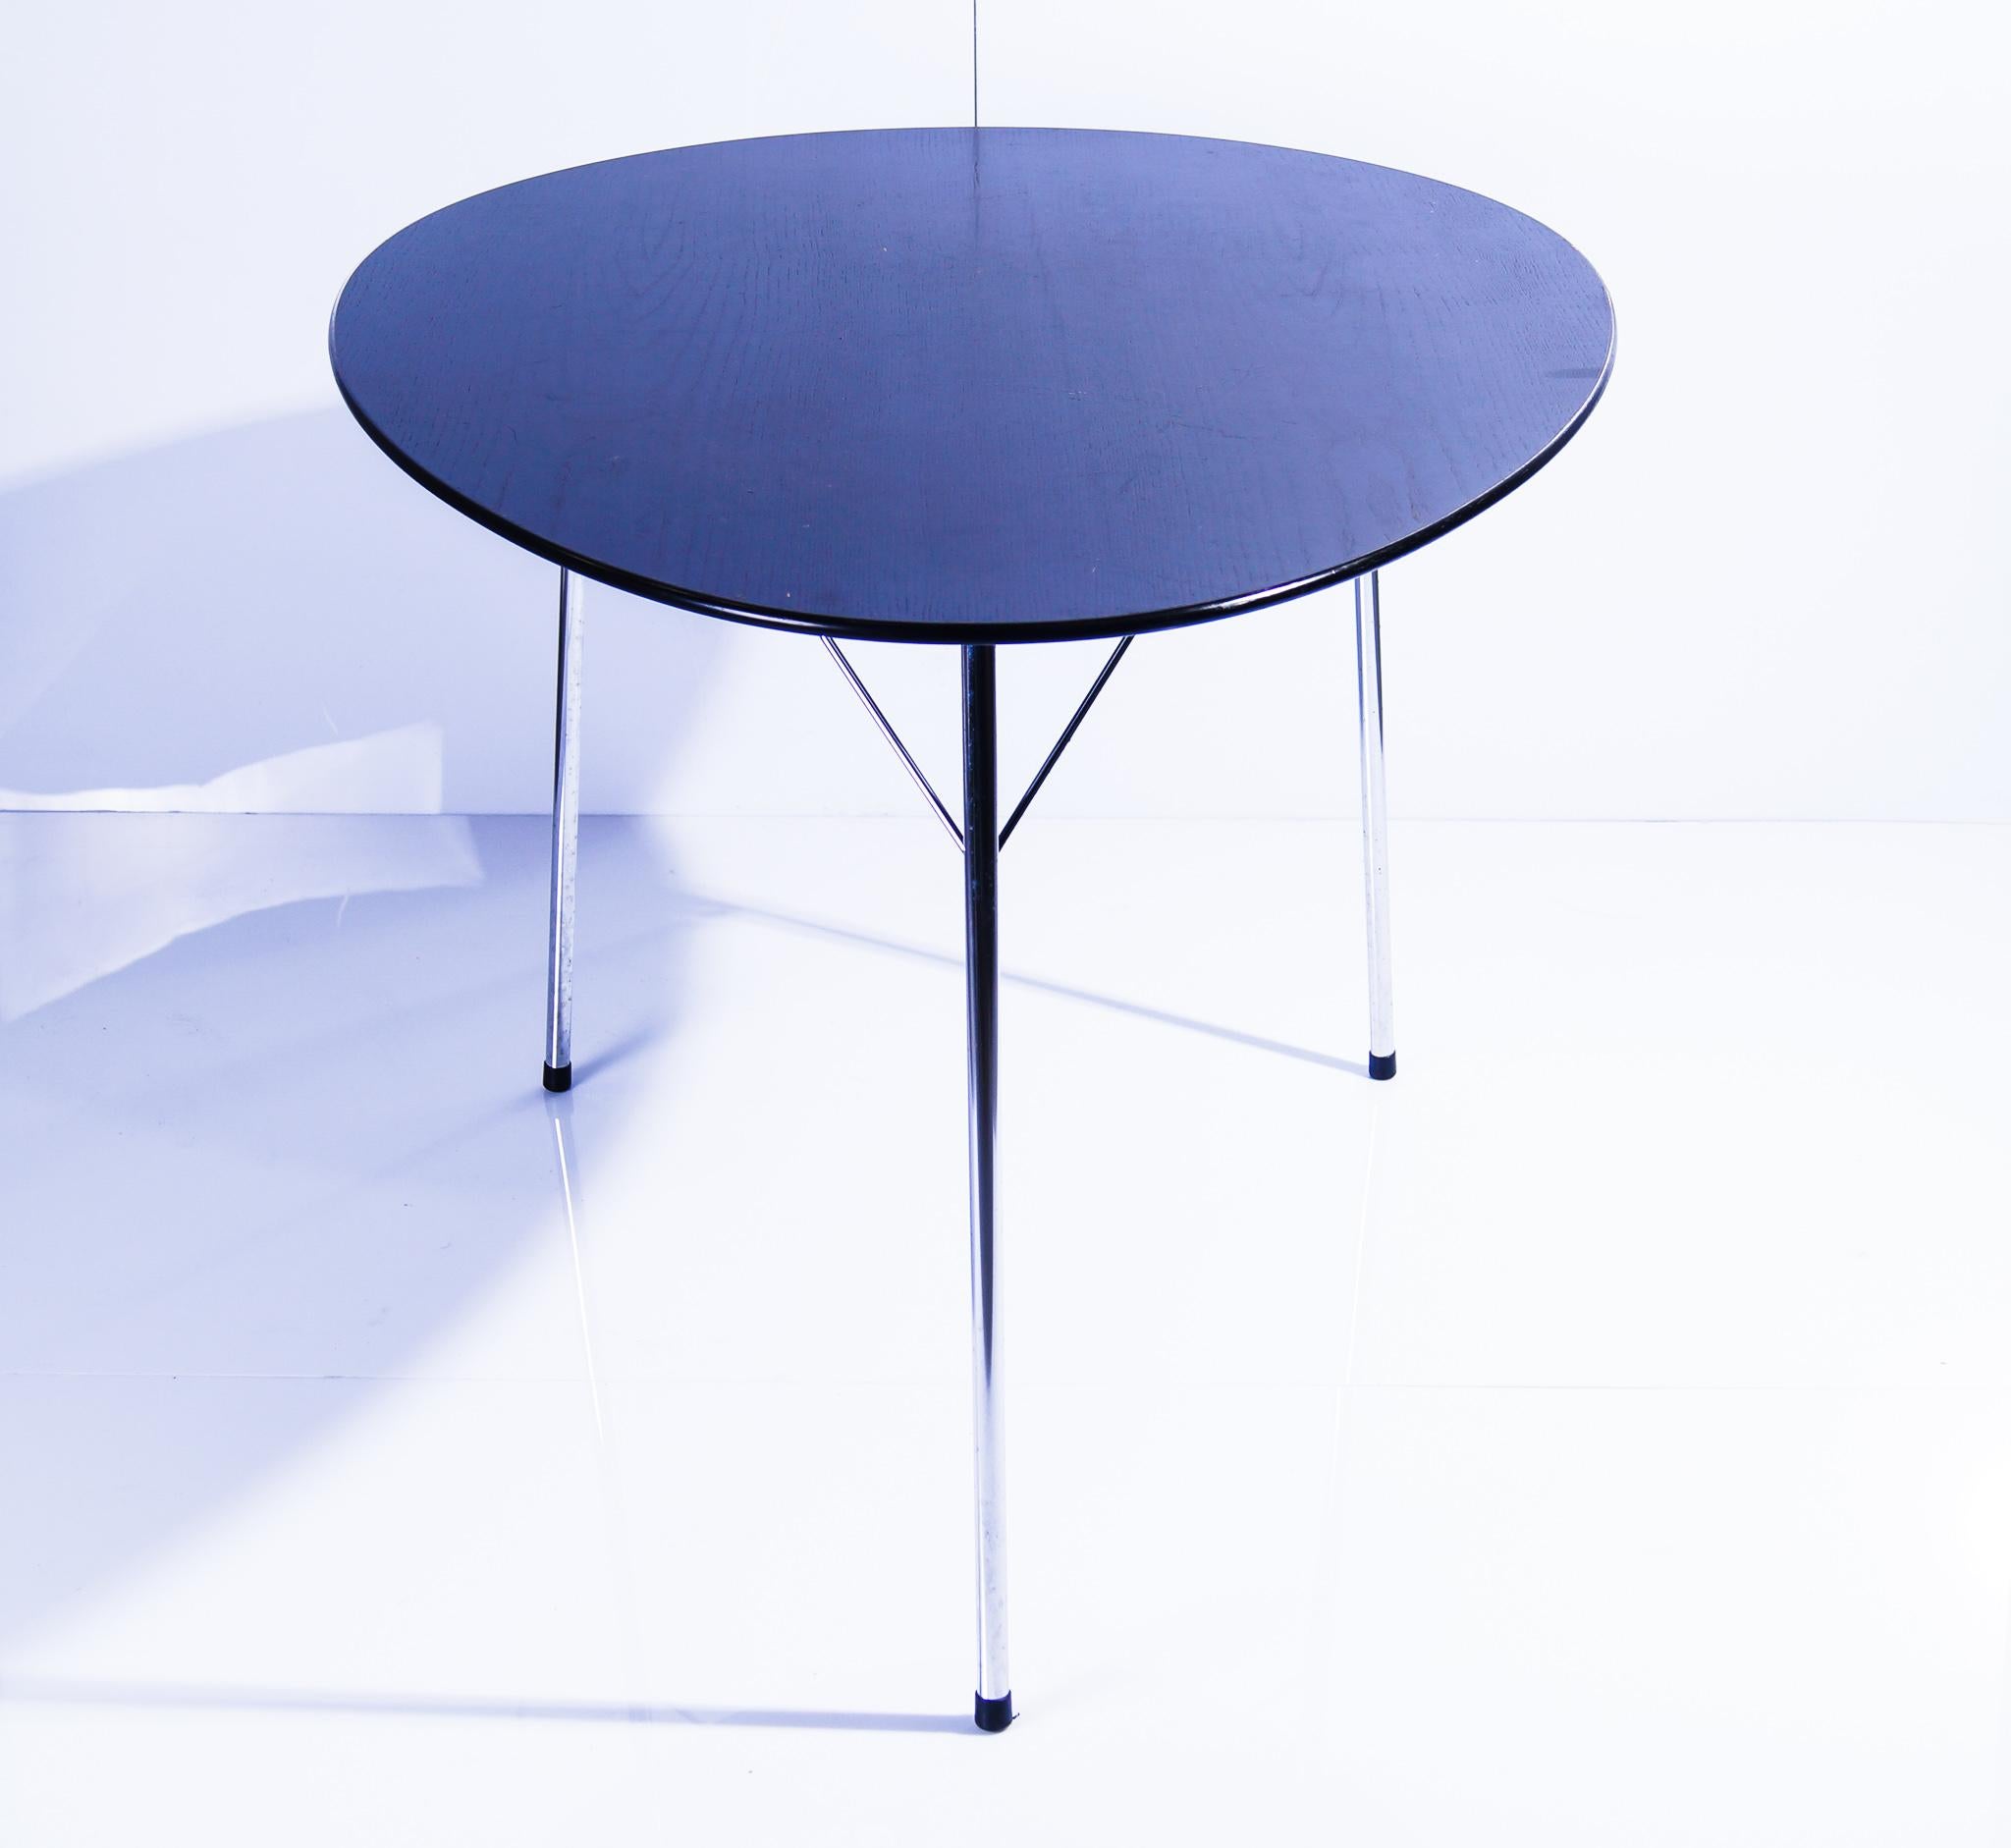 Arne Jacobsen, Oval Tapered-Shaped Table, Model 3603 1